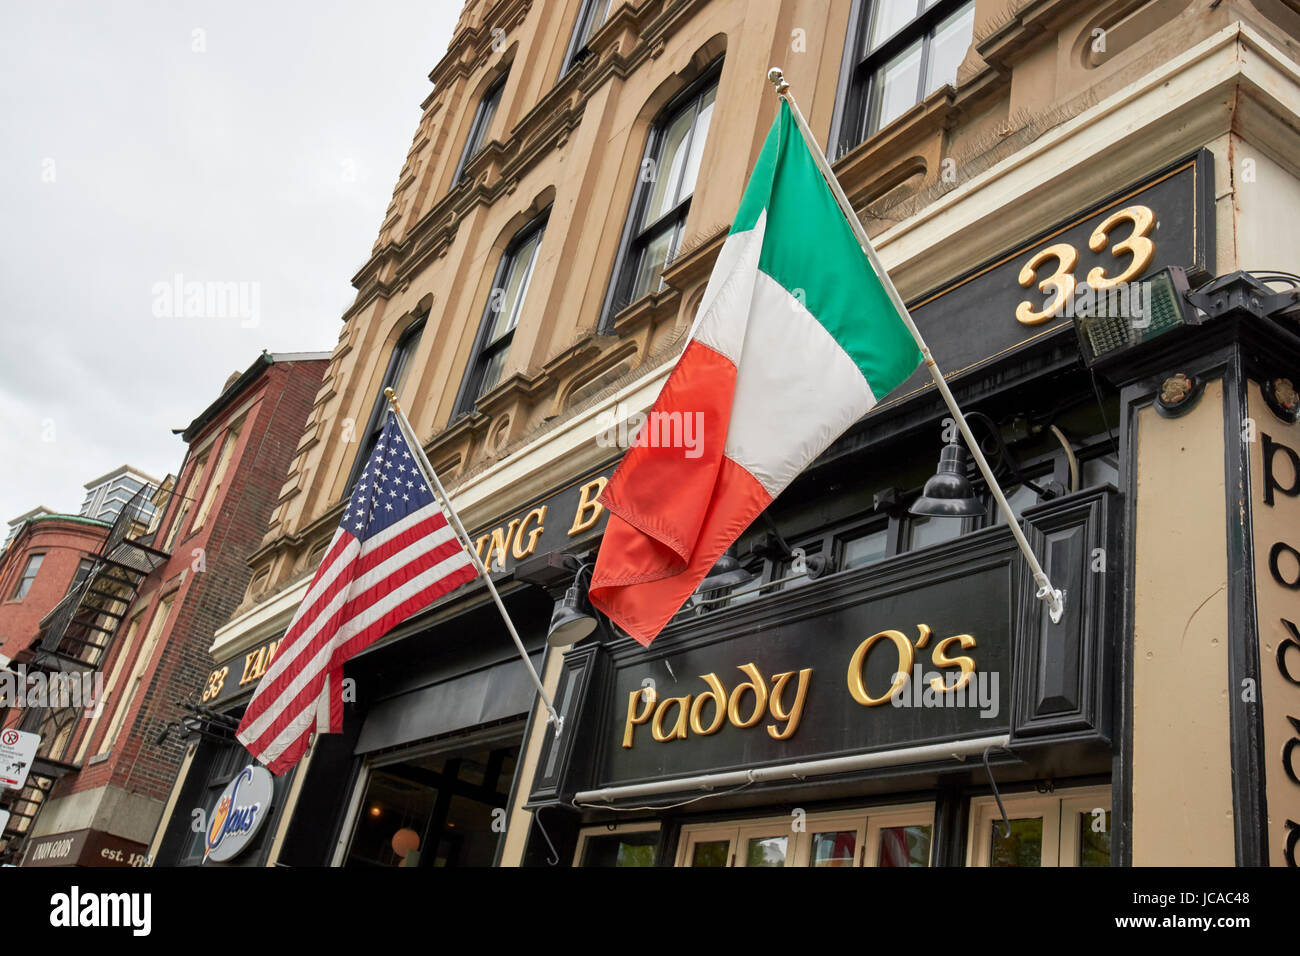 paddy o's irish american bar with irish and us flags flying Boston USA Stock Photo